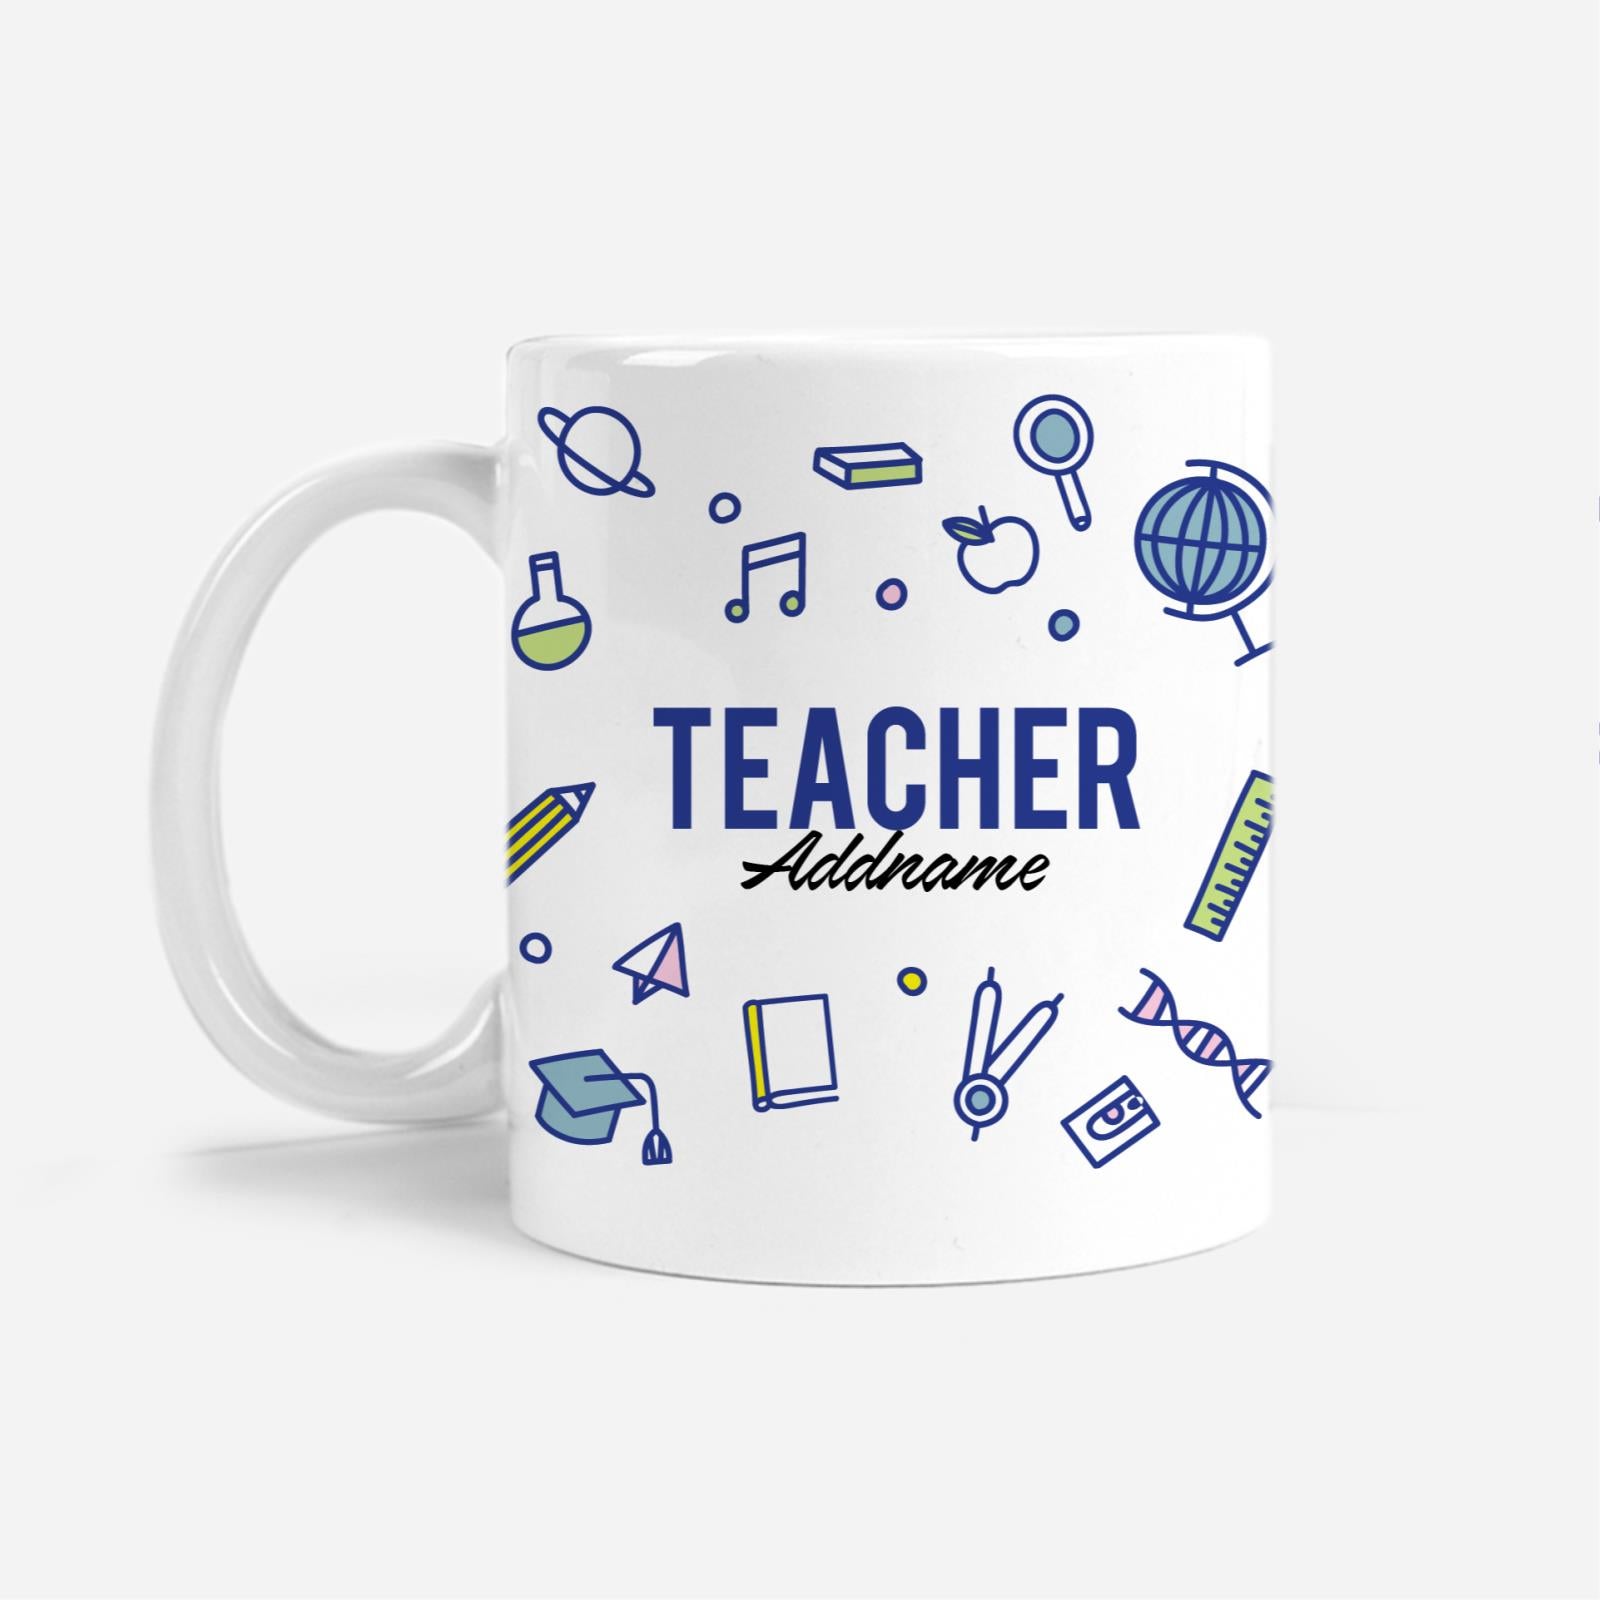 Teacher Title Mug - Teacher